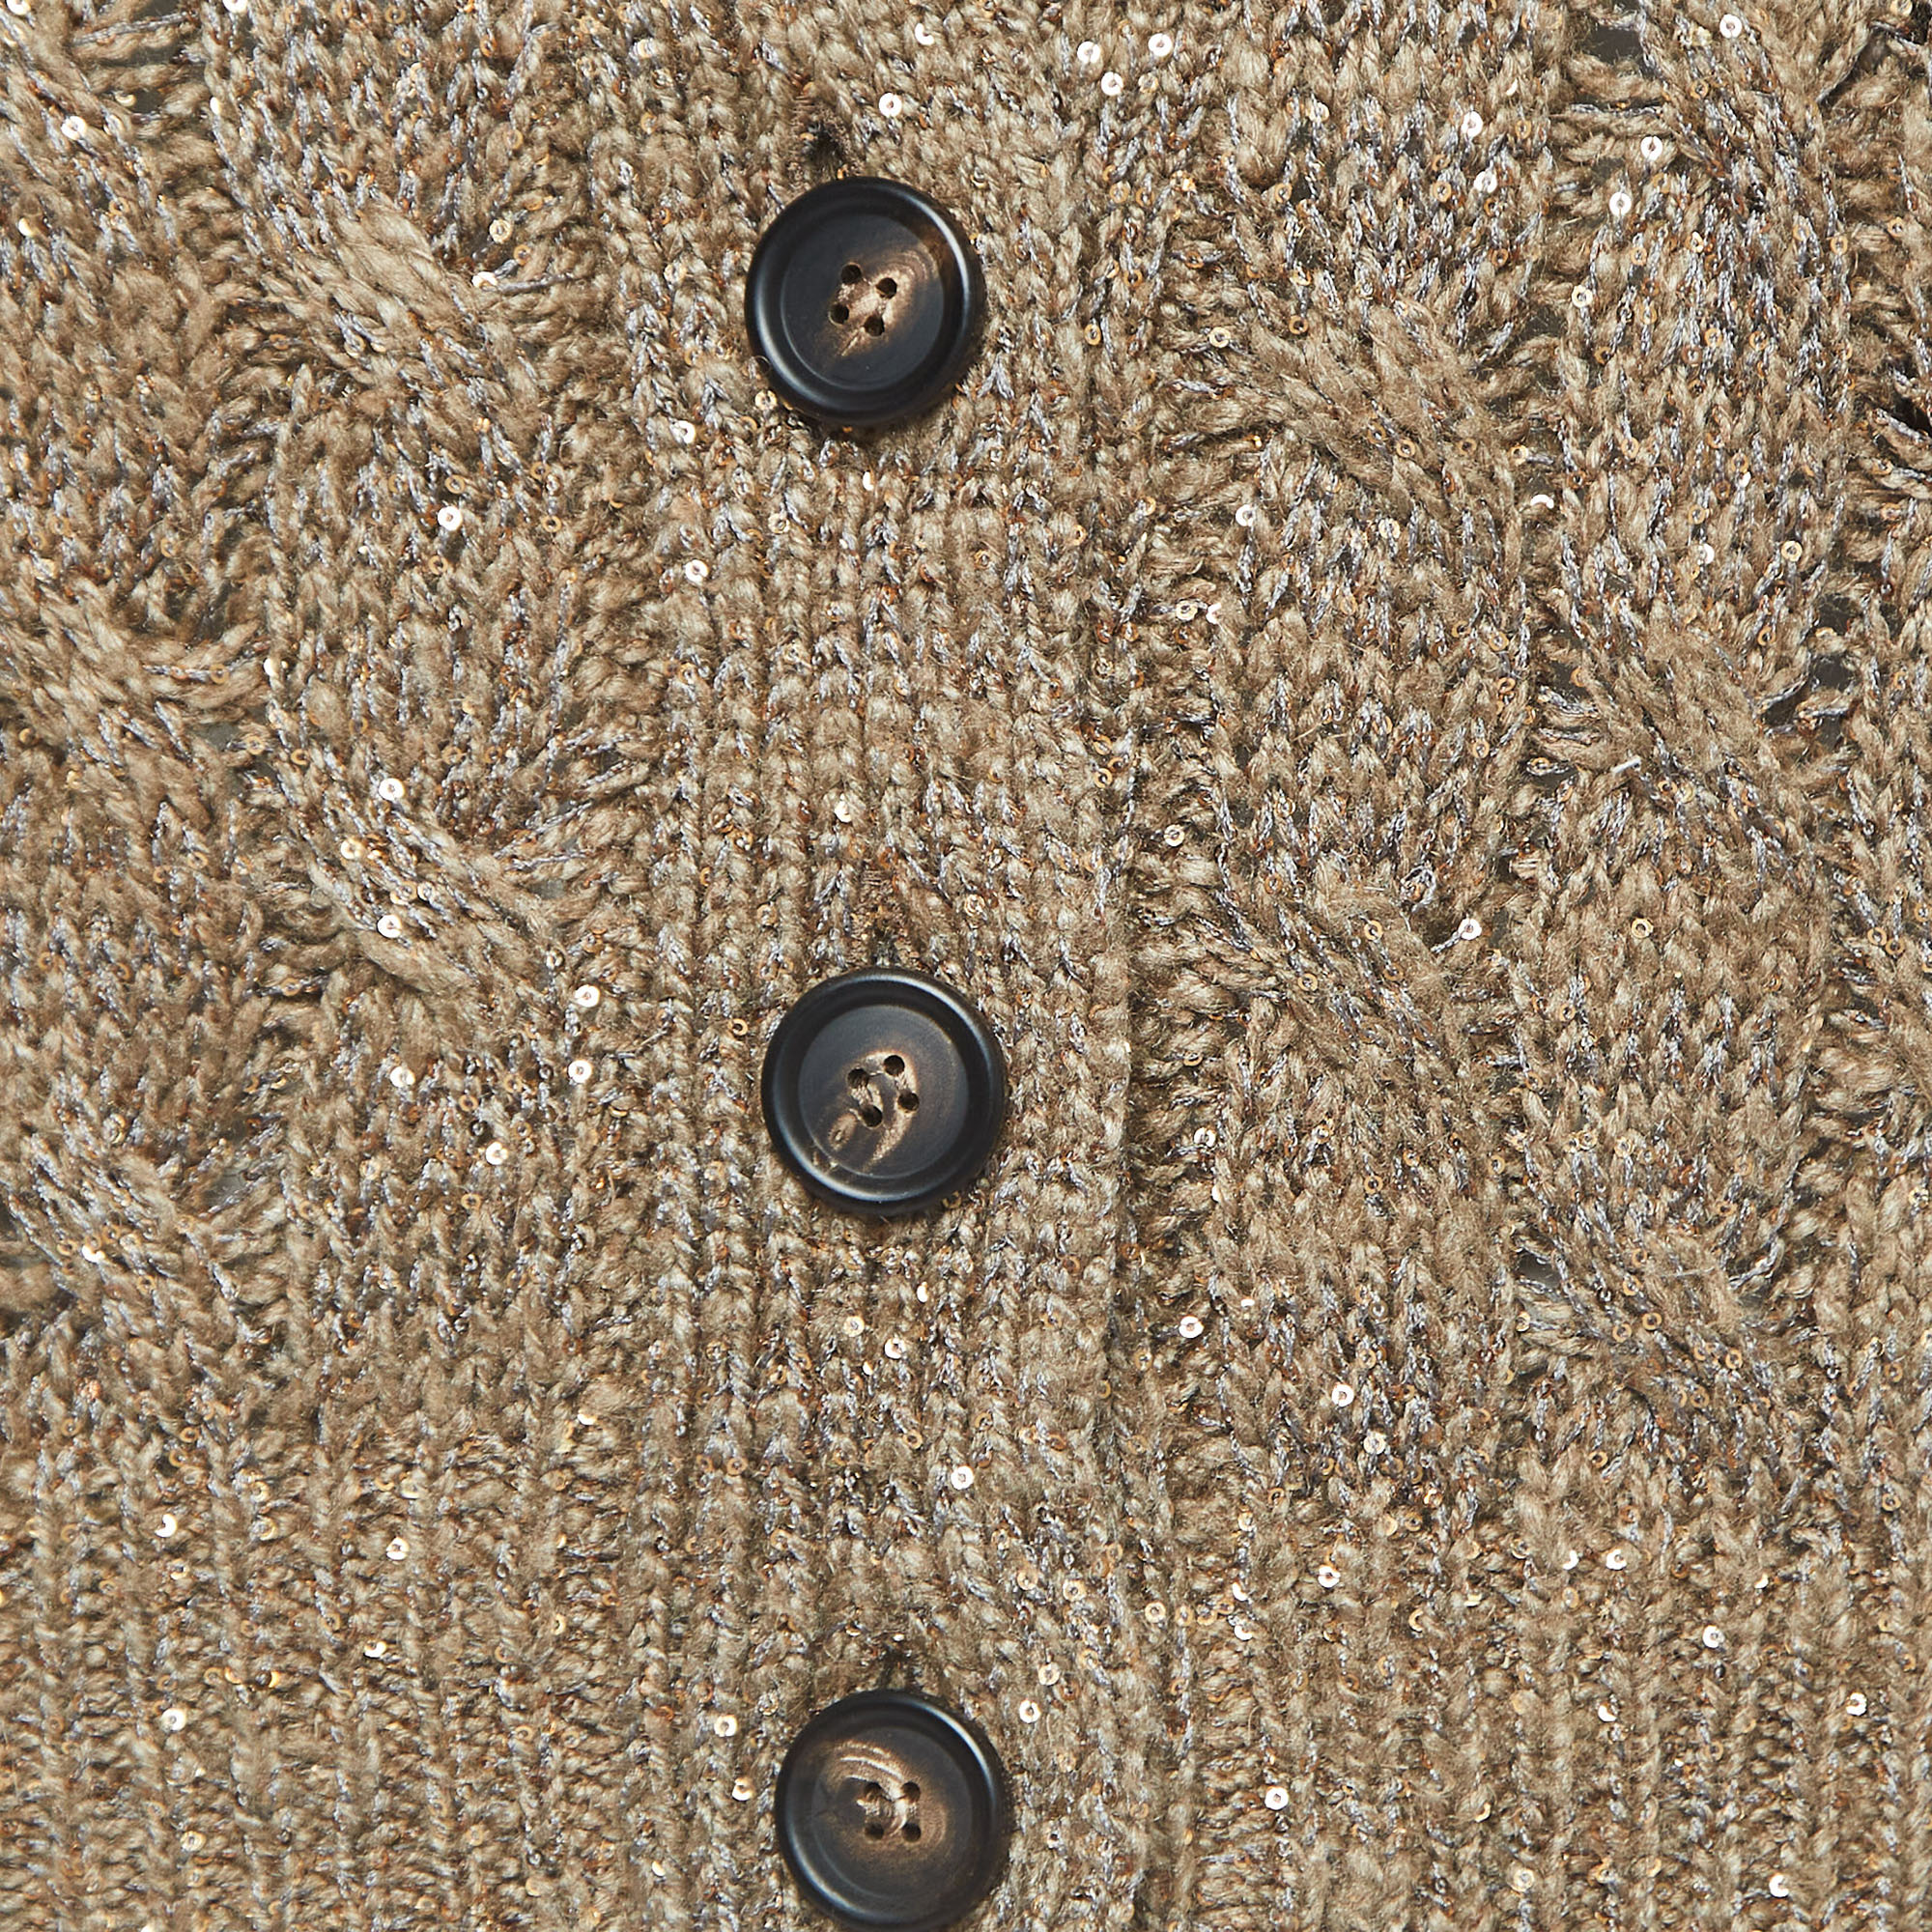 Brunello Cucinelli Borwn Sequined Cable Knit Cardigan XL